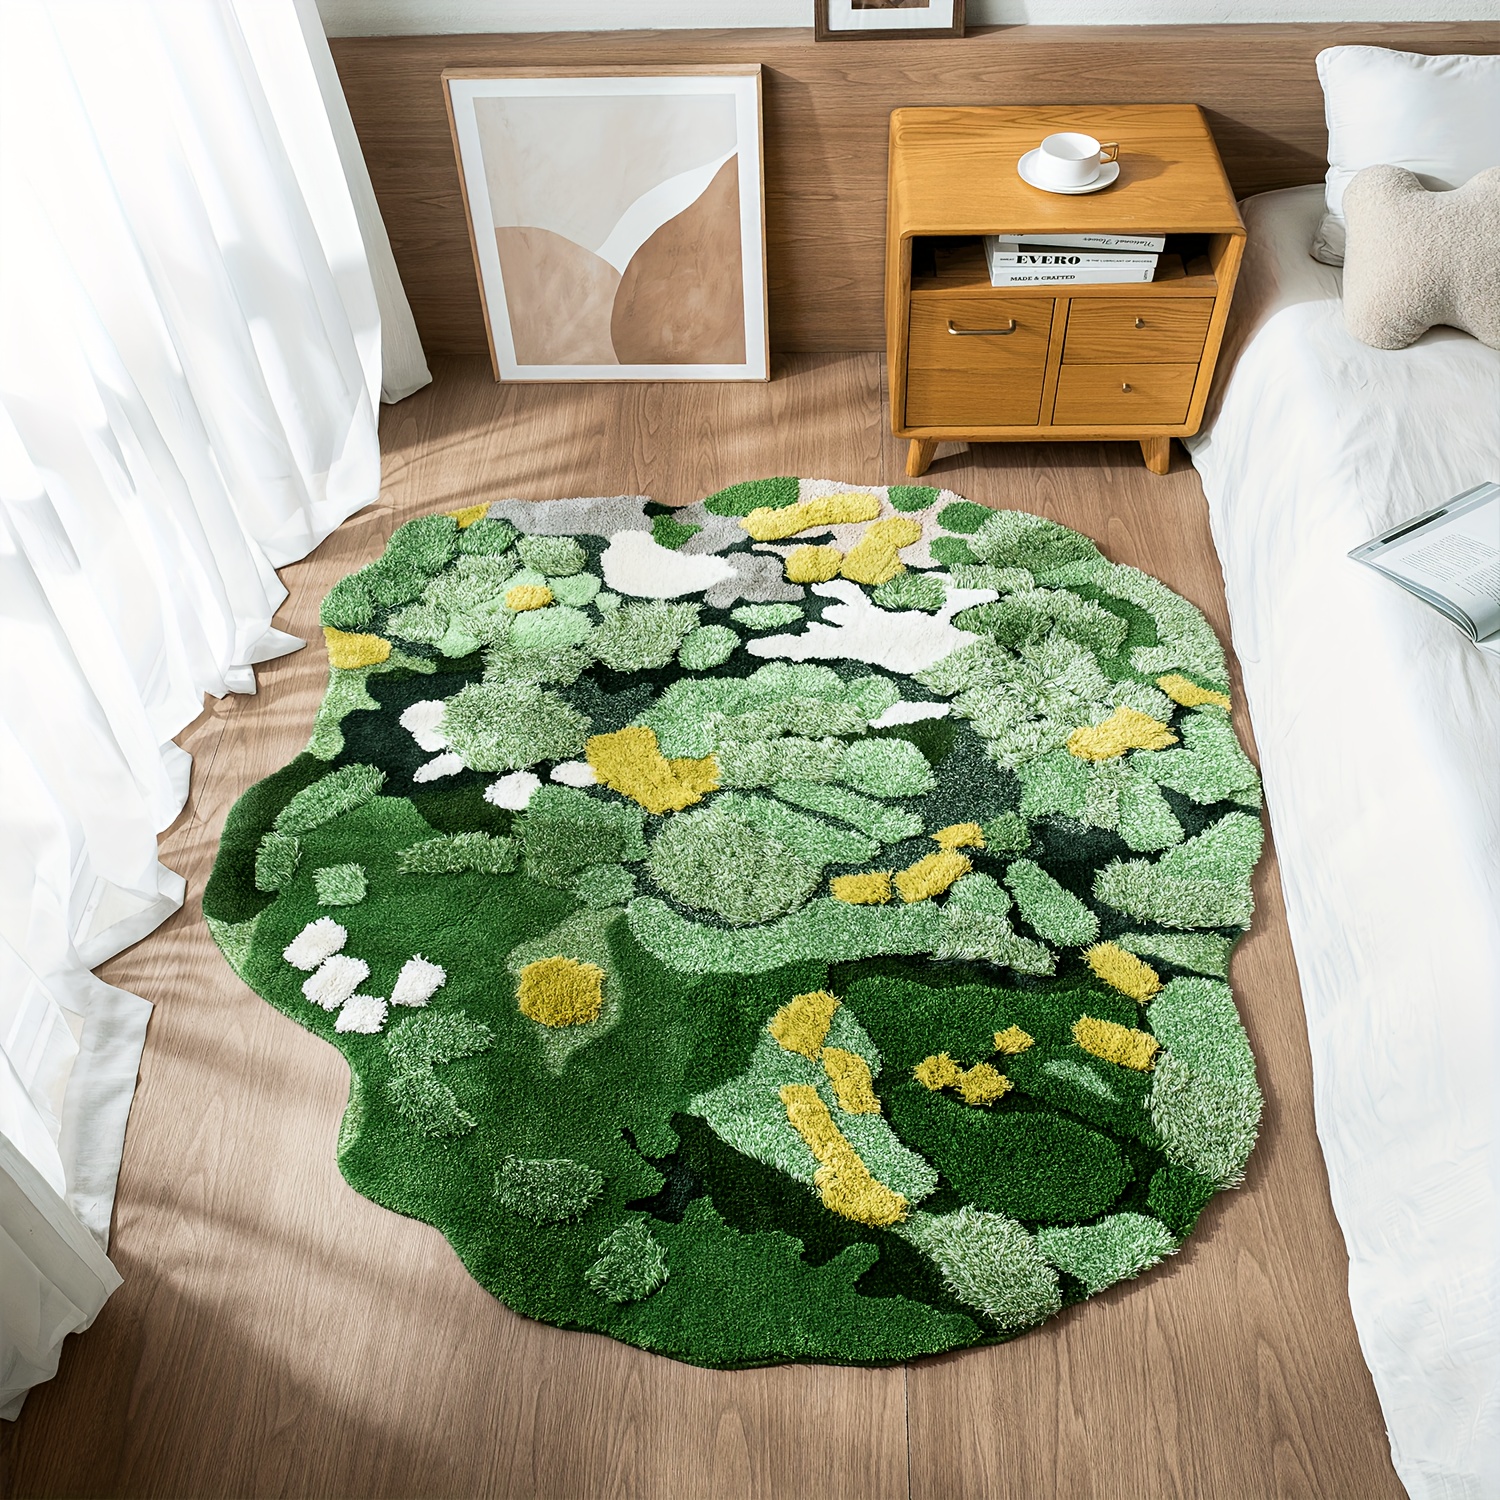 Handmade Diy Moss Coaster Carpet Living rRoom Bedroom Indoor Home  Decoration Non Slip Super Comfortable And Fluffy - AliExpress